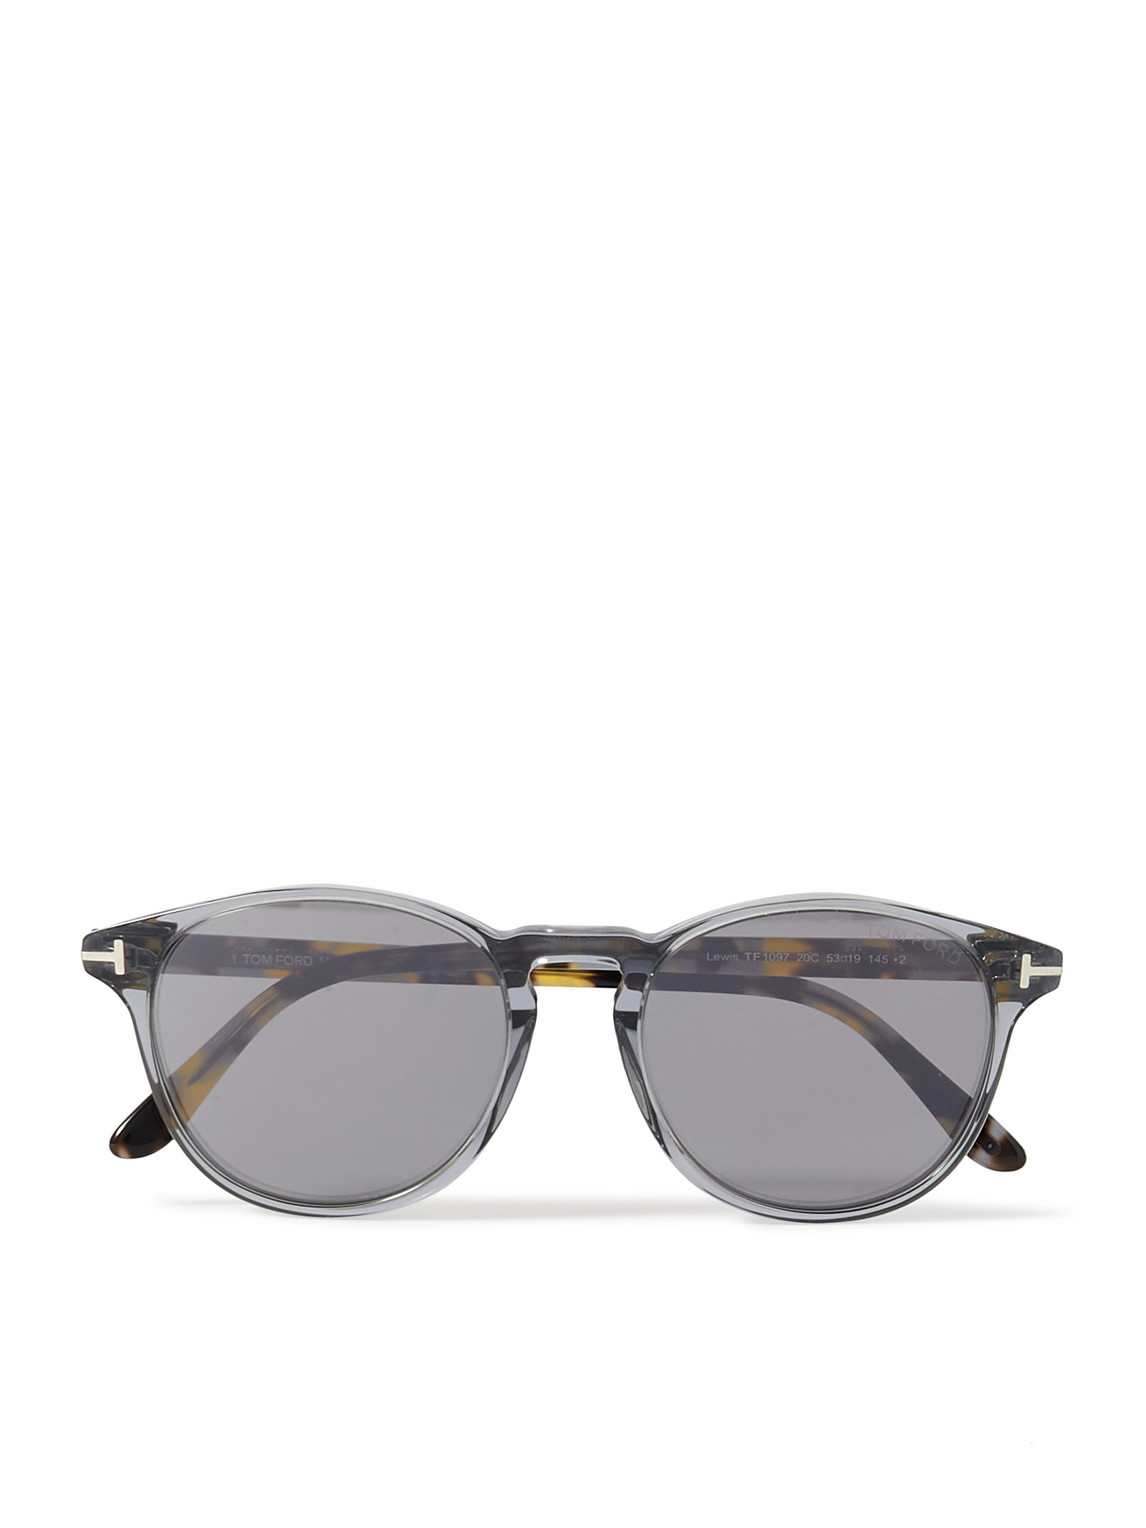 Tom Ford Lewis Round-frame Tortoiseshell Acetate Sunglasses In Gray